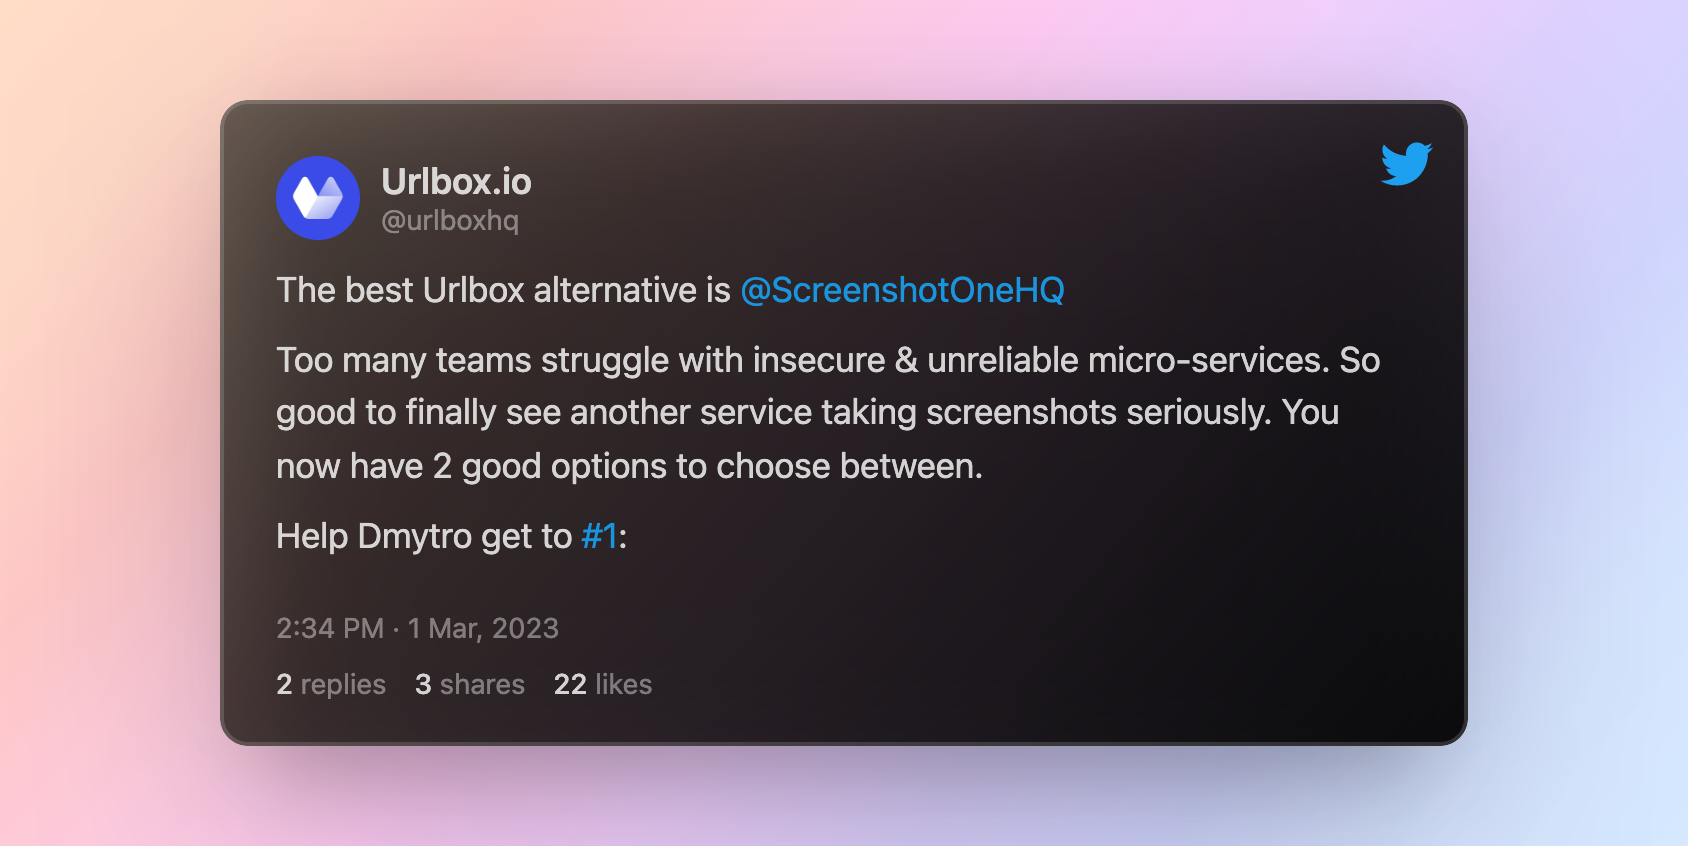 Urlbox supported ScreenshotOne